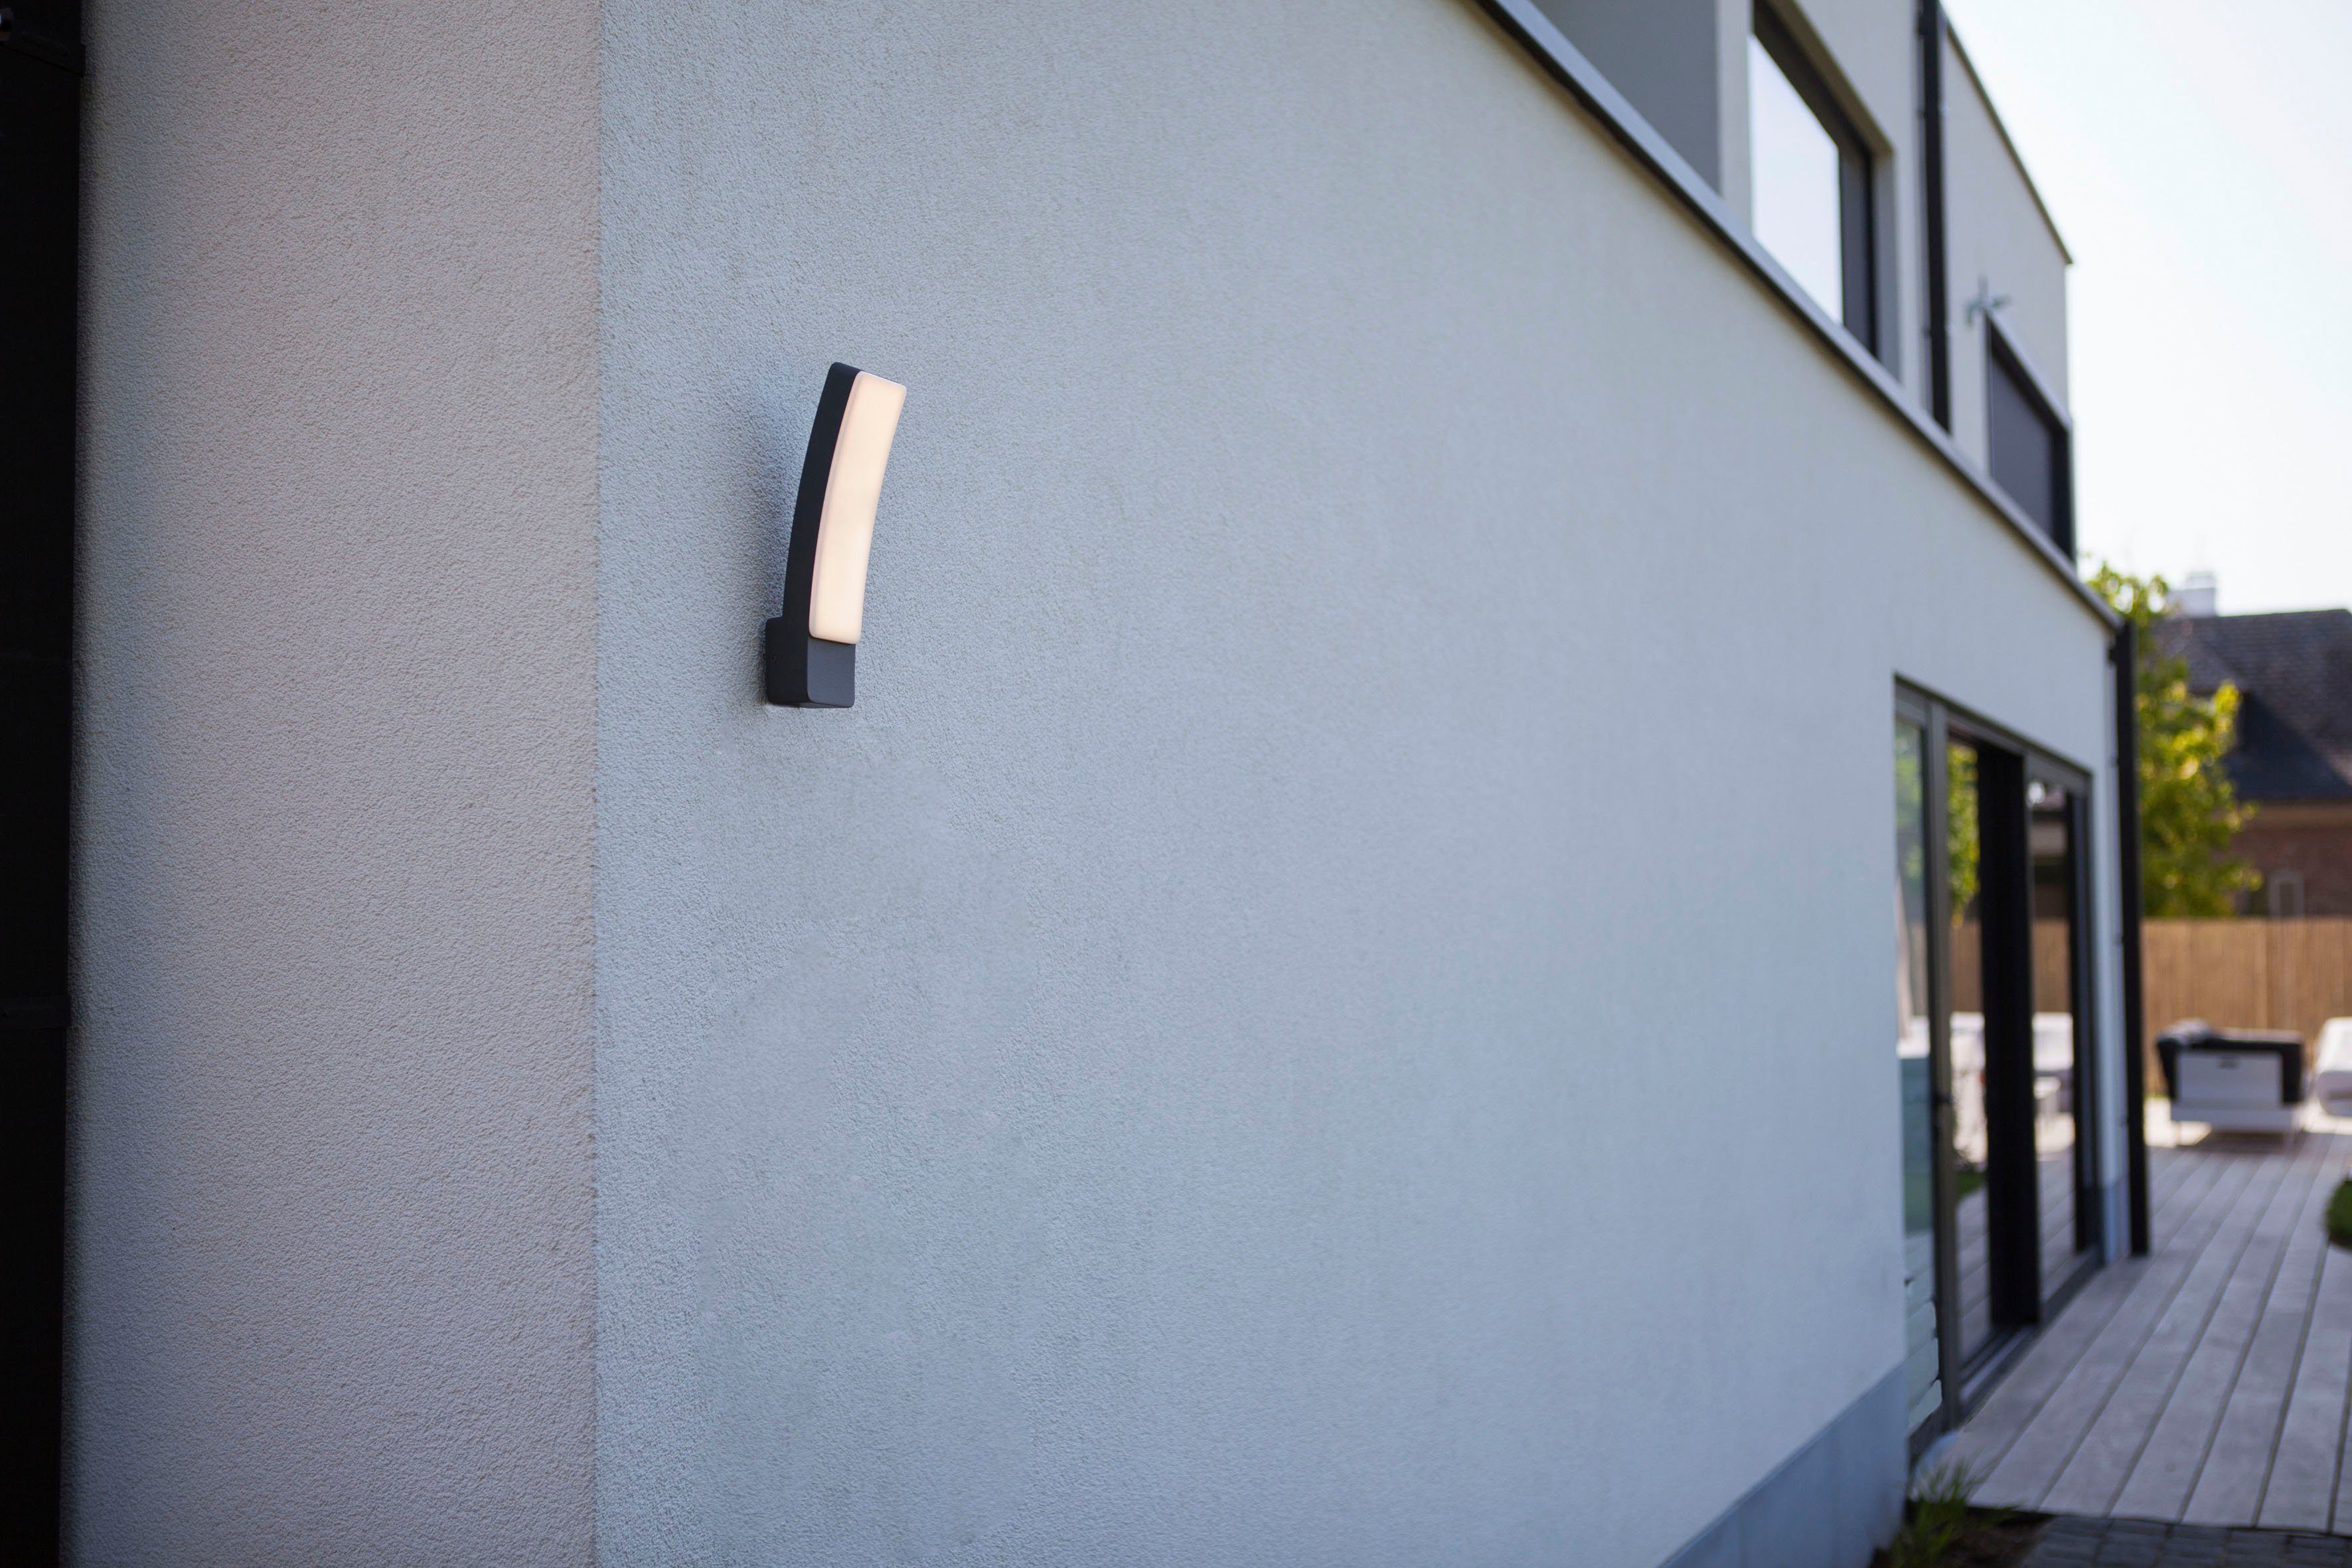 LUTEC Smarte LED-Leuchte KIRA, fest LED Smart-Home integriert